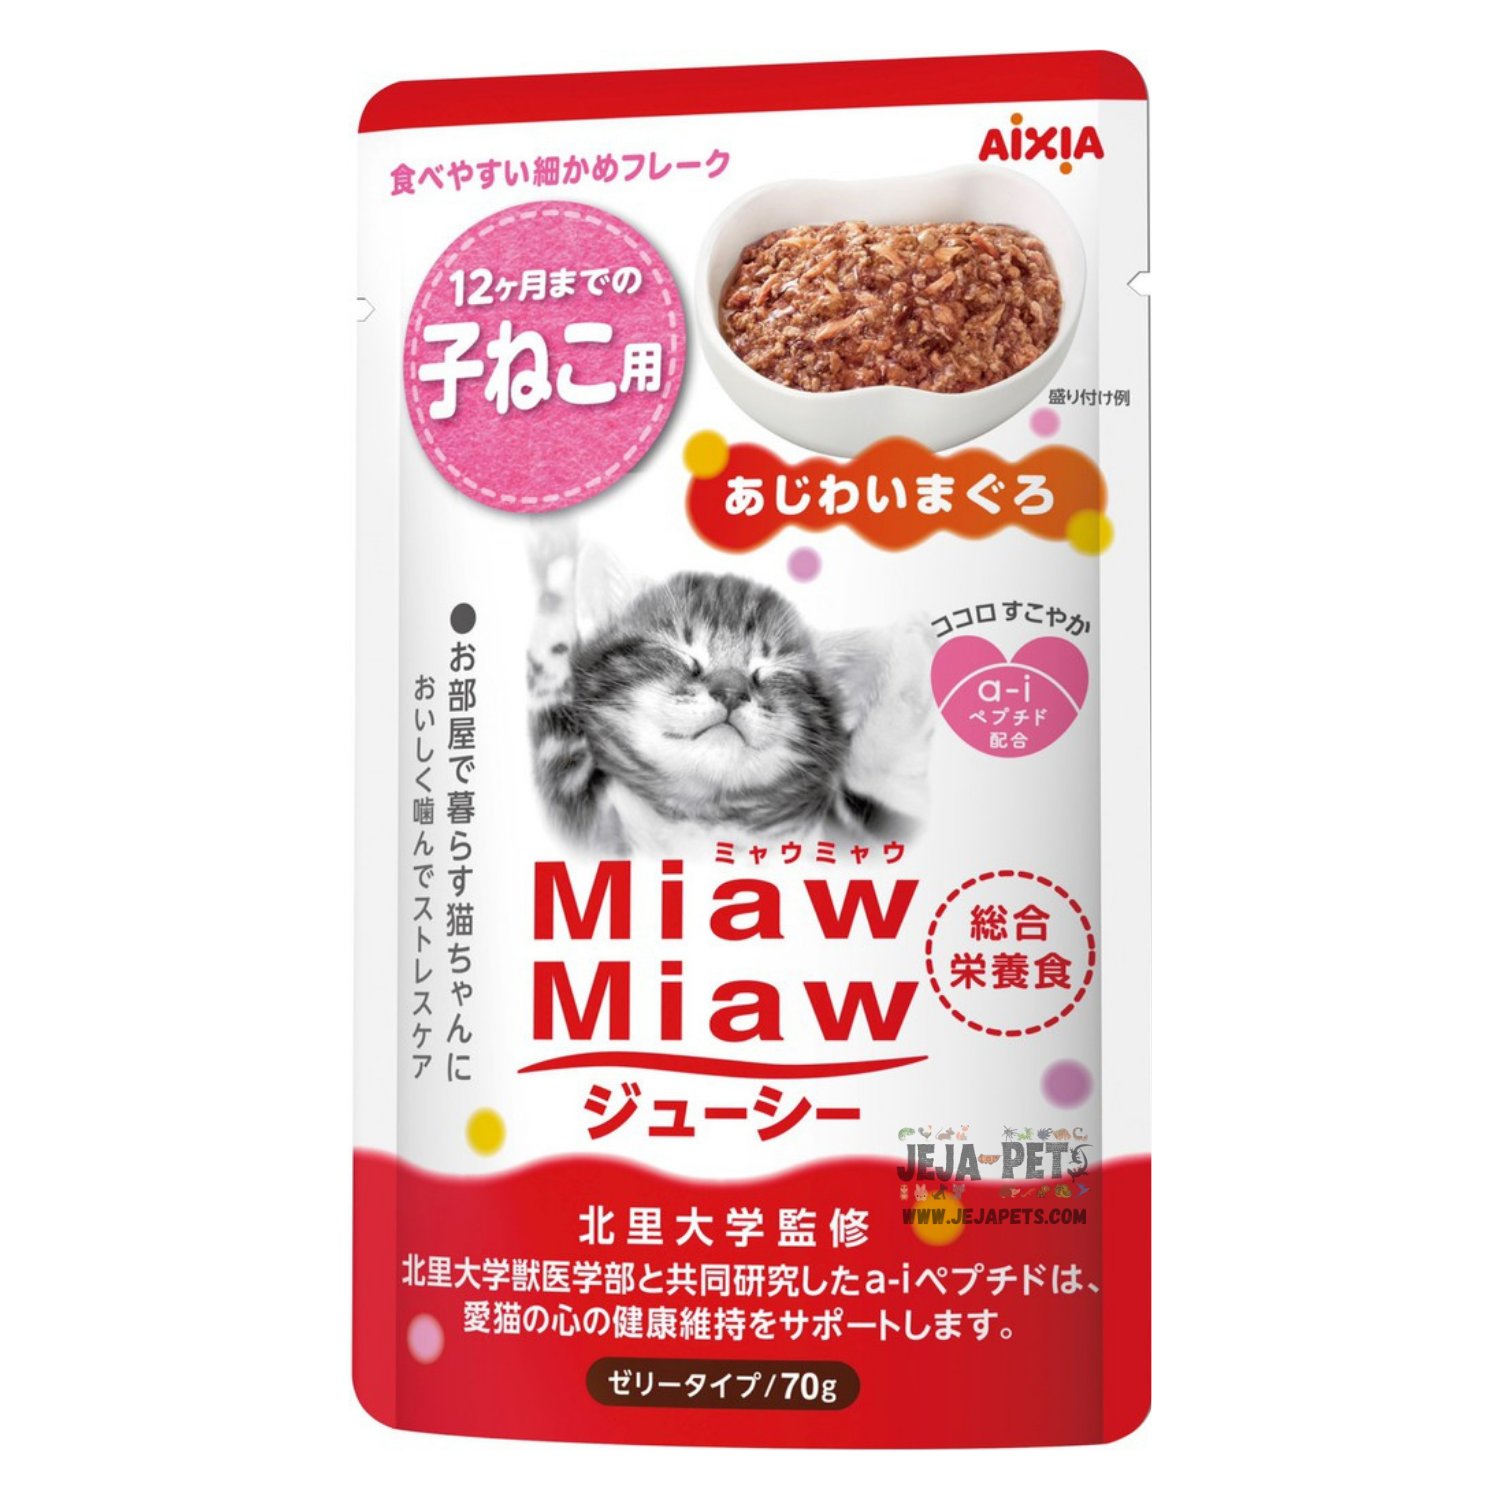 Aixia Miaw Miaw Juicy Pouch Tuna for Kitten - 70g